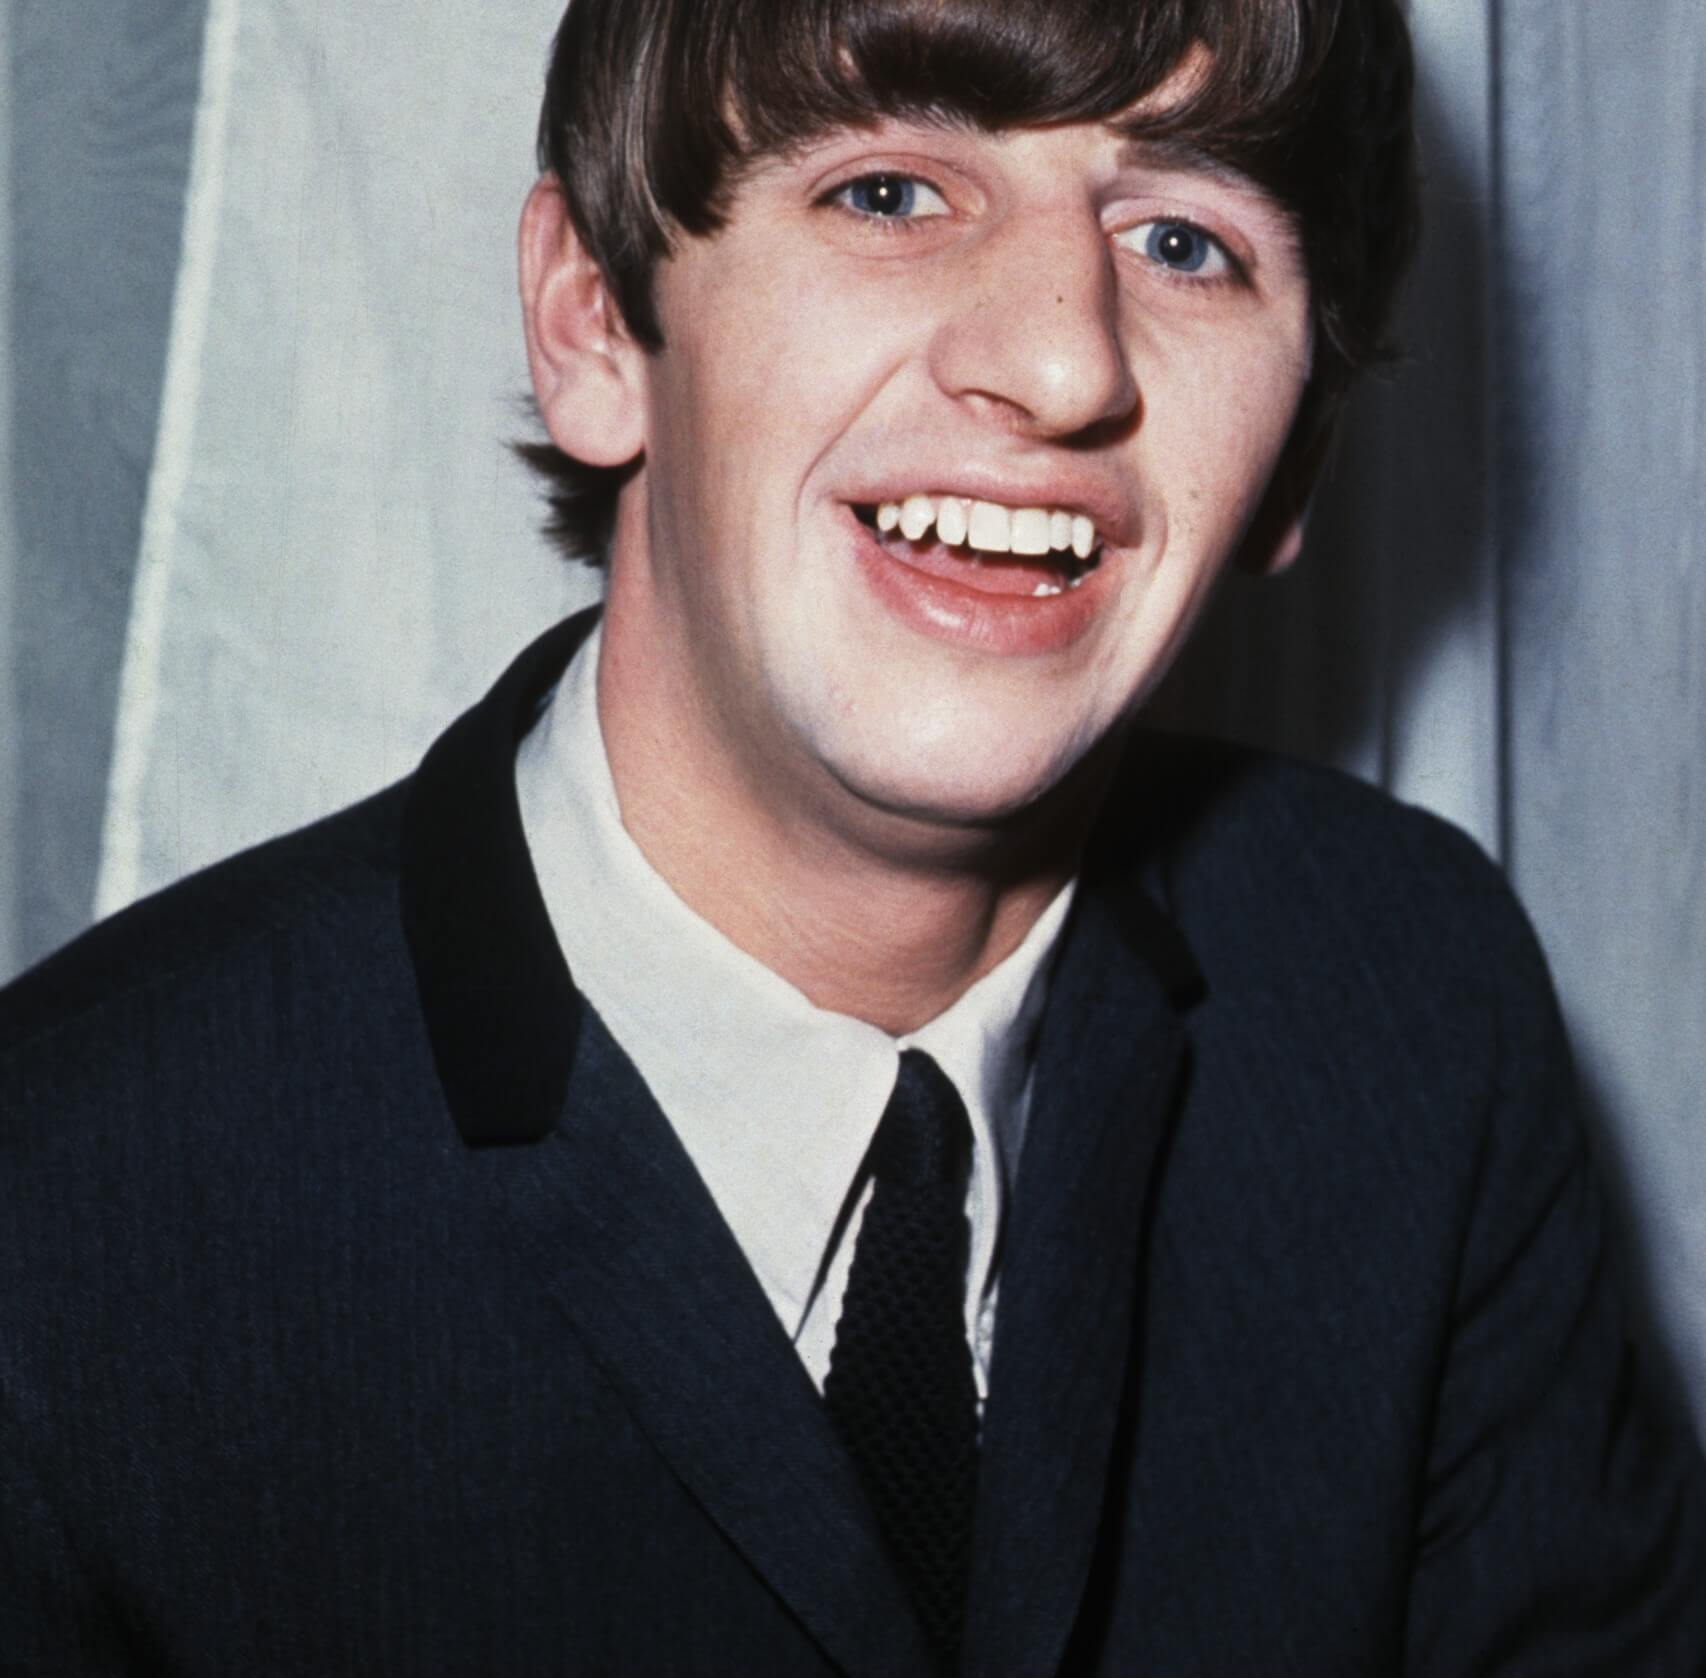 Ringo Starr wearing a suit